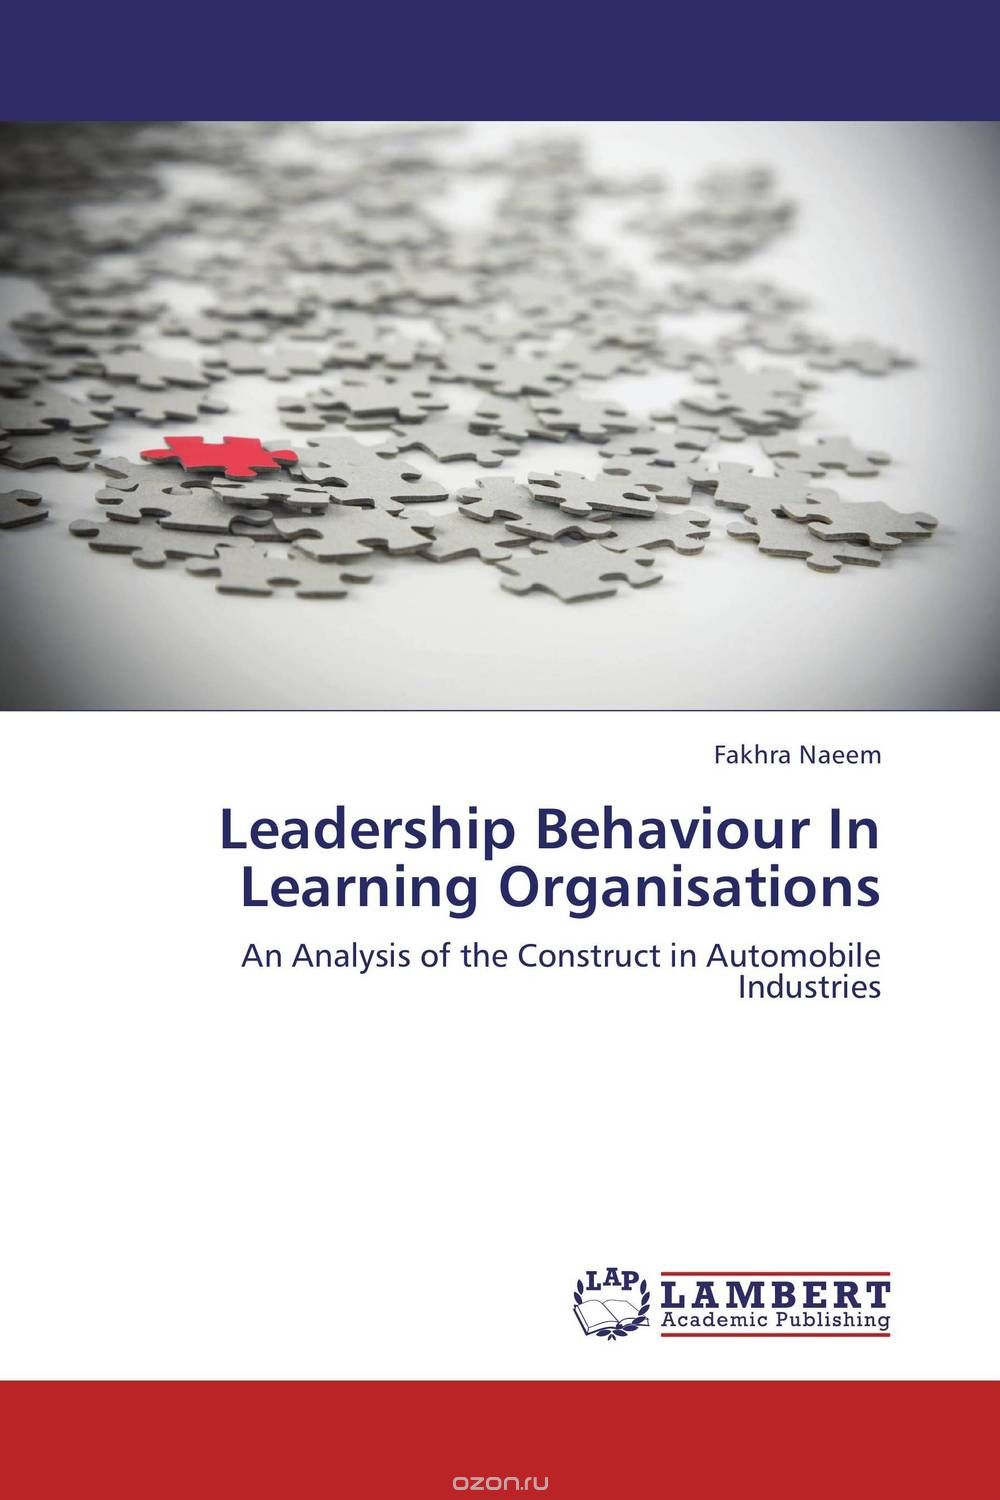 Скачать книгу "Leadership Behaviour In Learning Organisations"